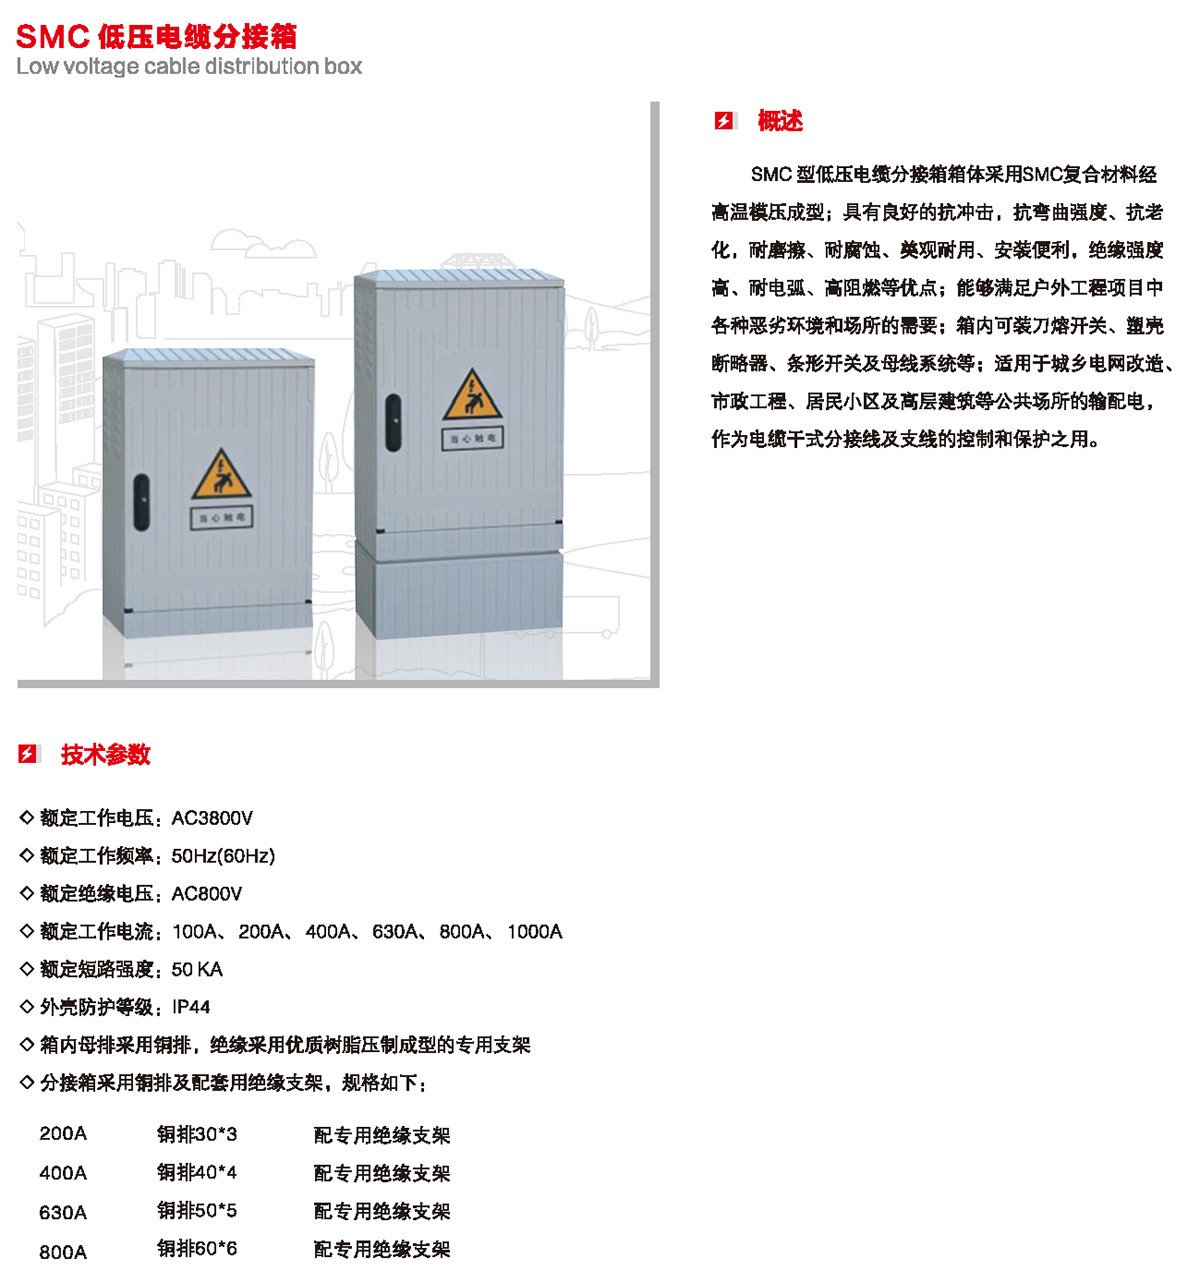 SMC 低壓電纜分接箱概述、技術參數